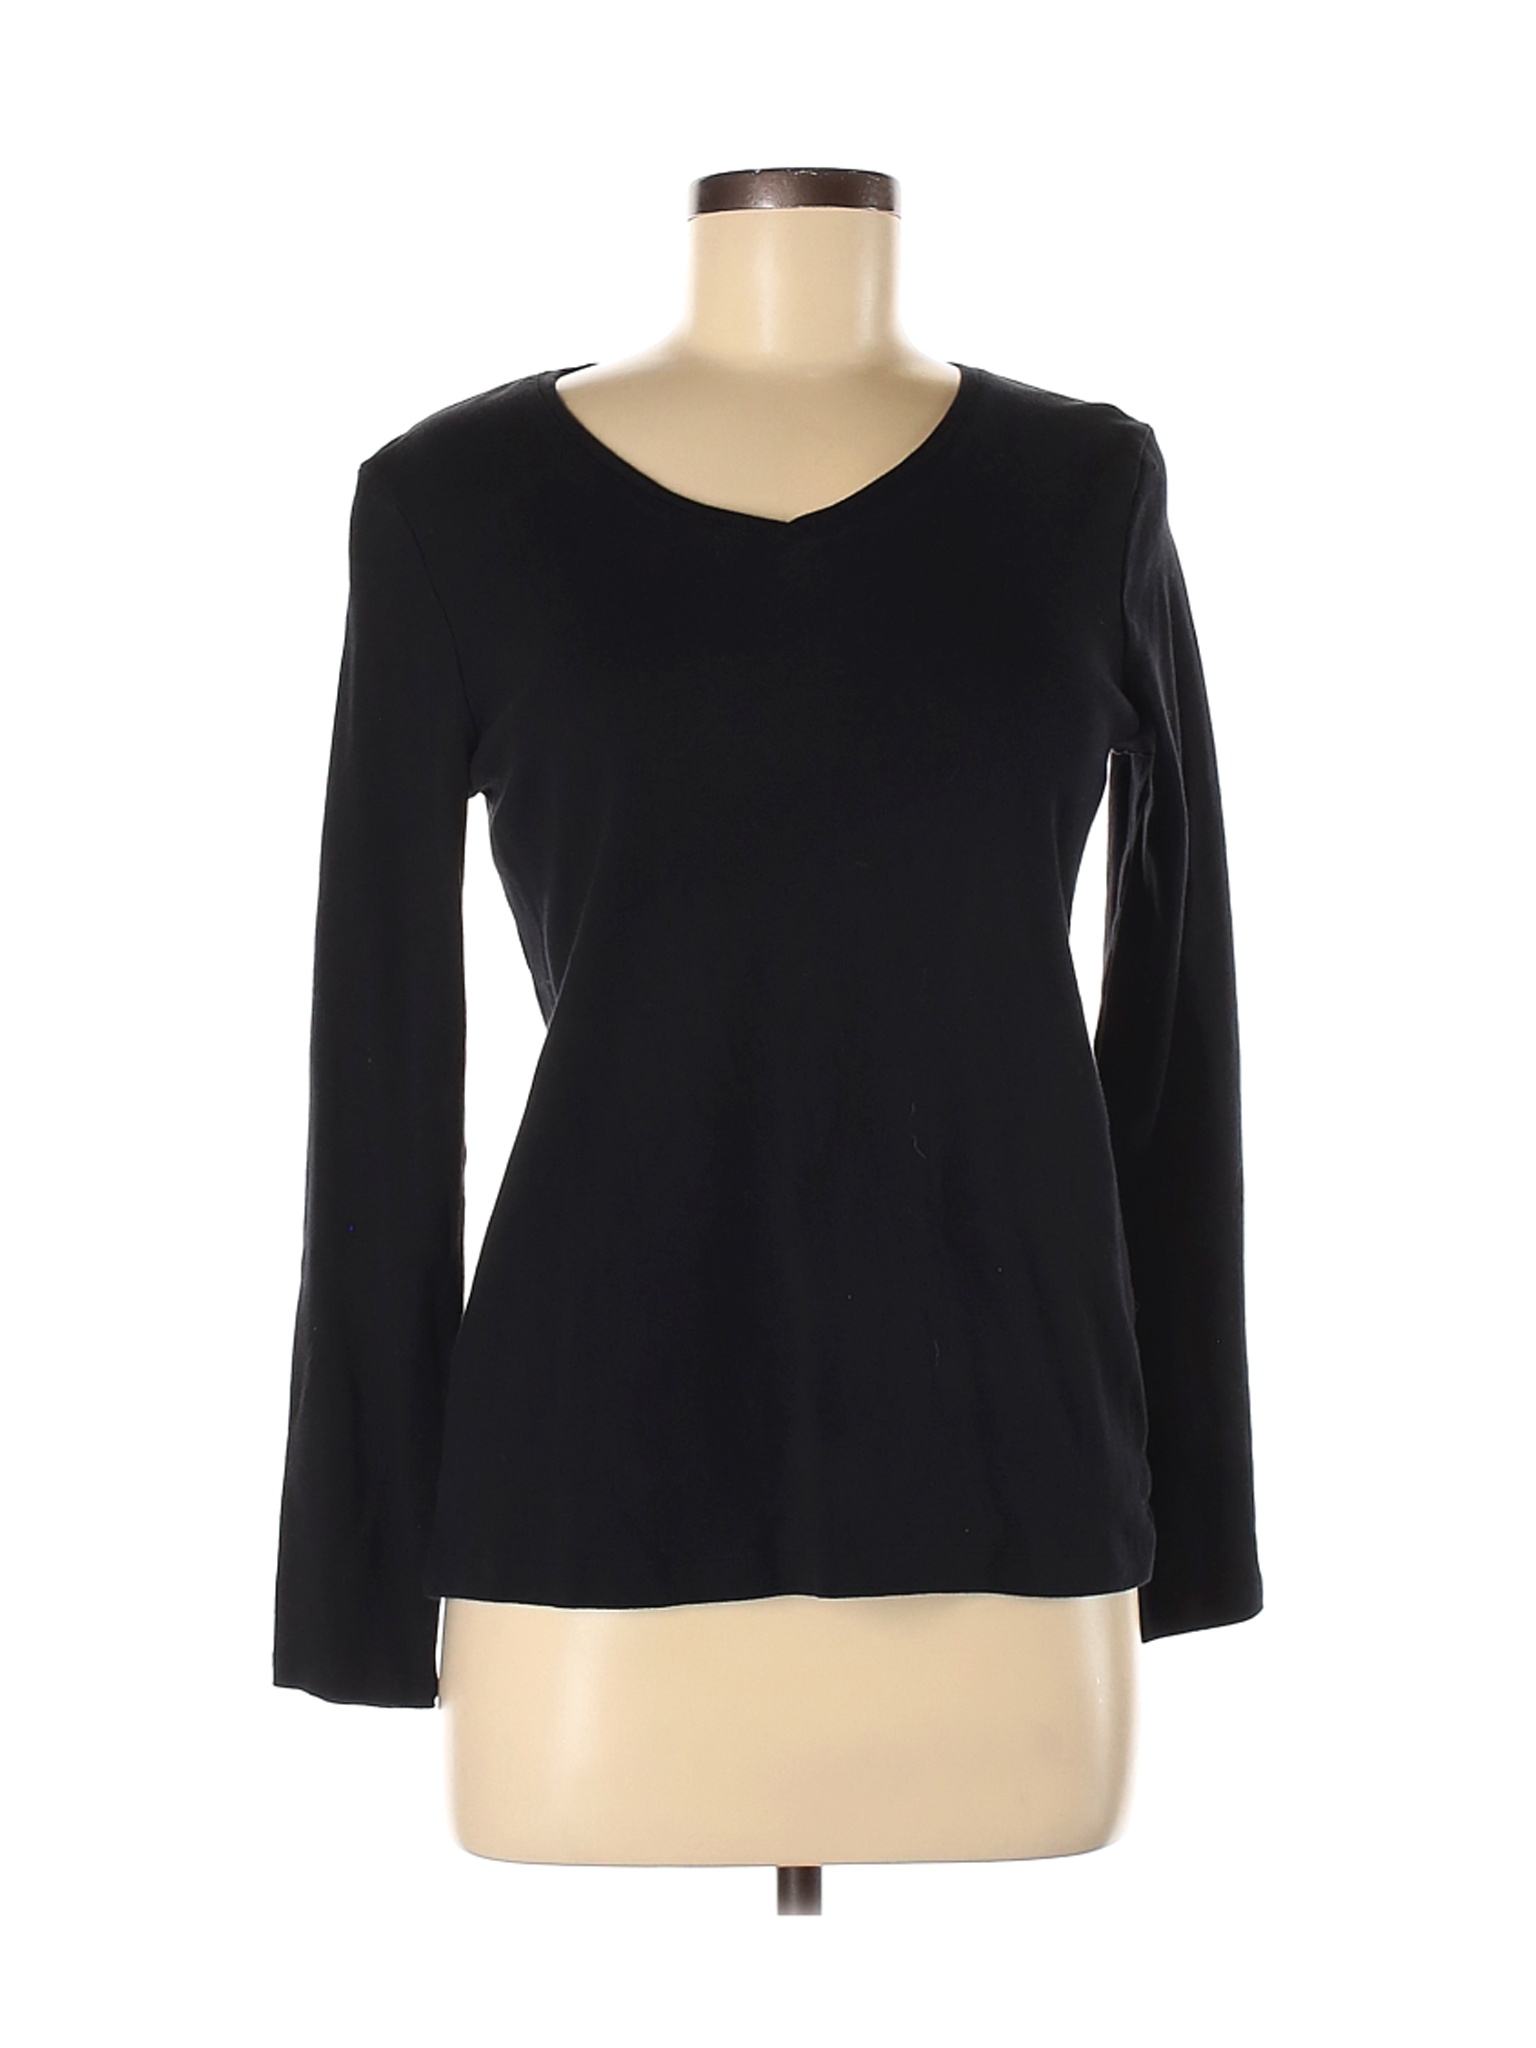 Croft & Barrow Women Black Long Sleeve Top M | eBay